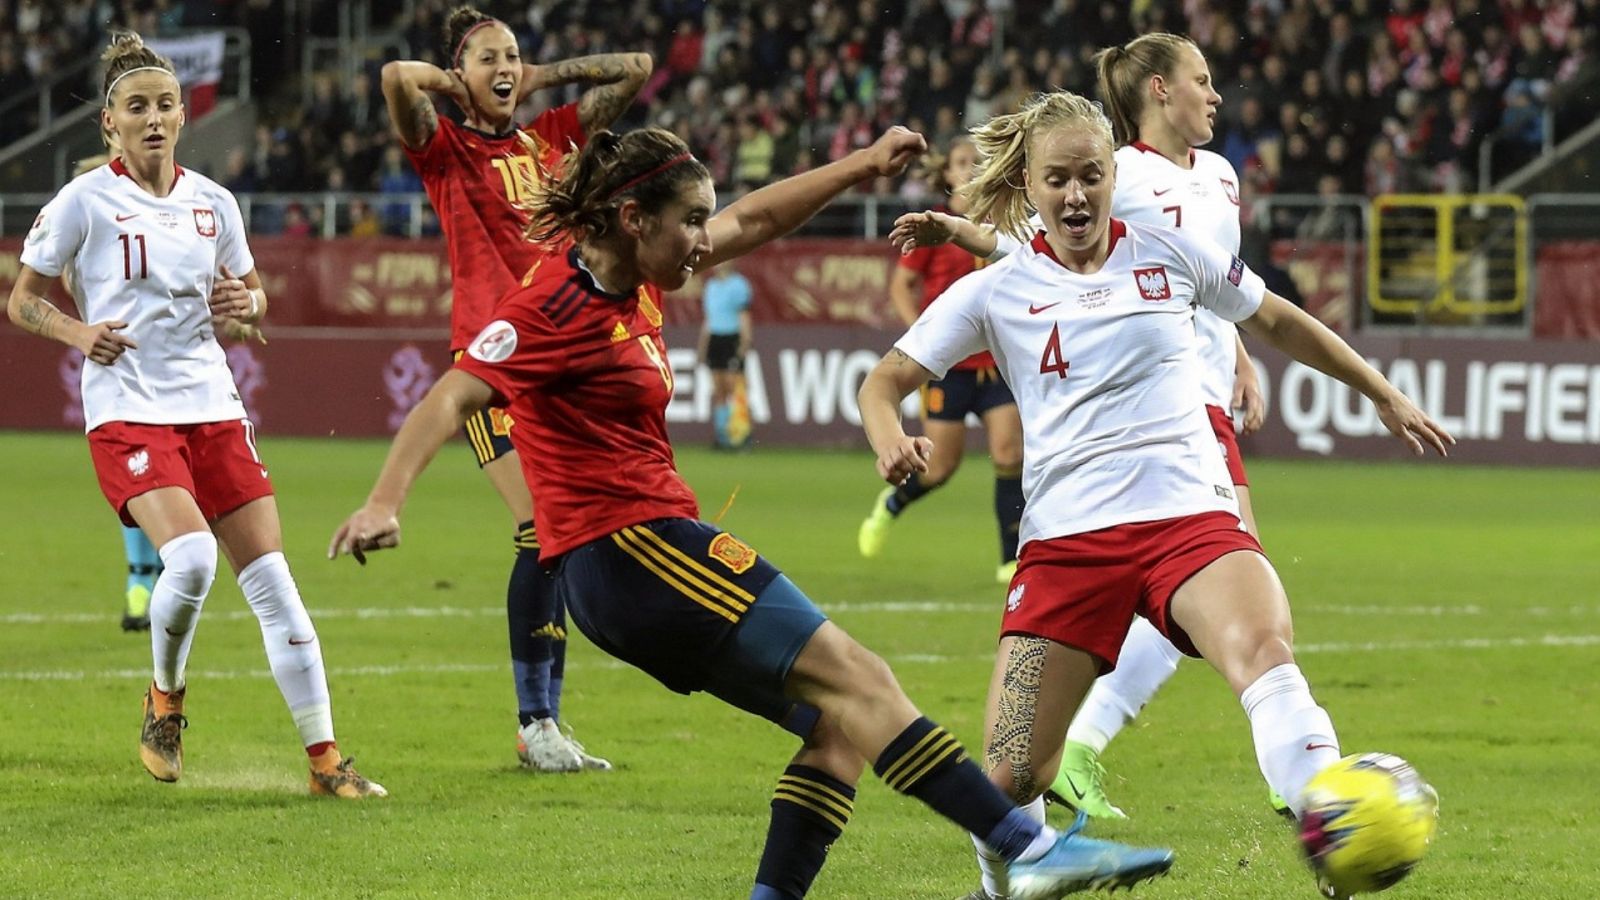 Fútbol - Clasificación Eurocopa femenina 2021 3ª jornada: Polonia - España - RTVE.es